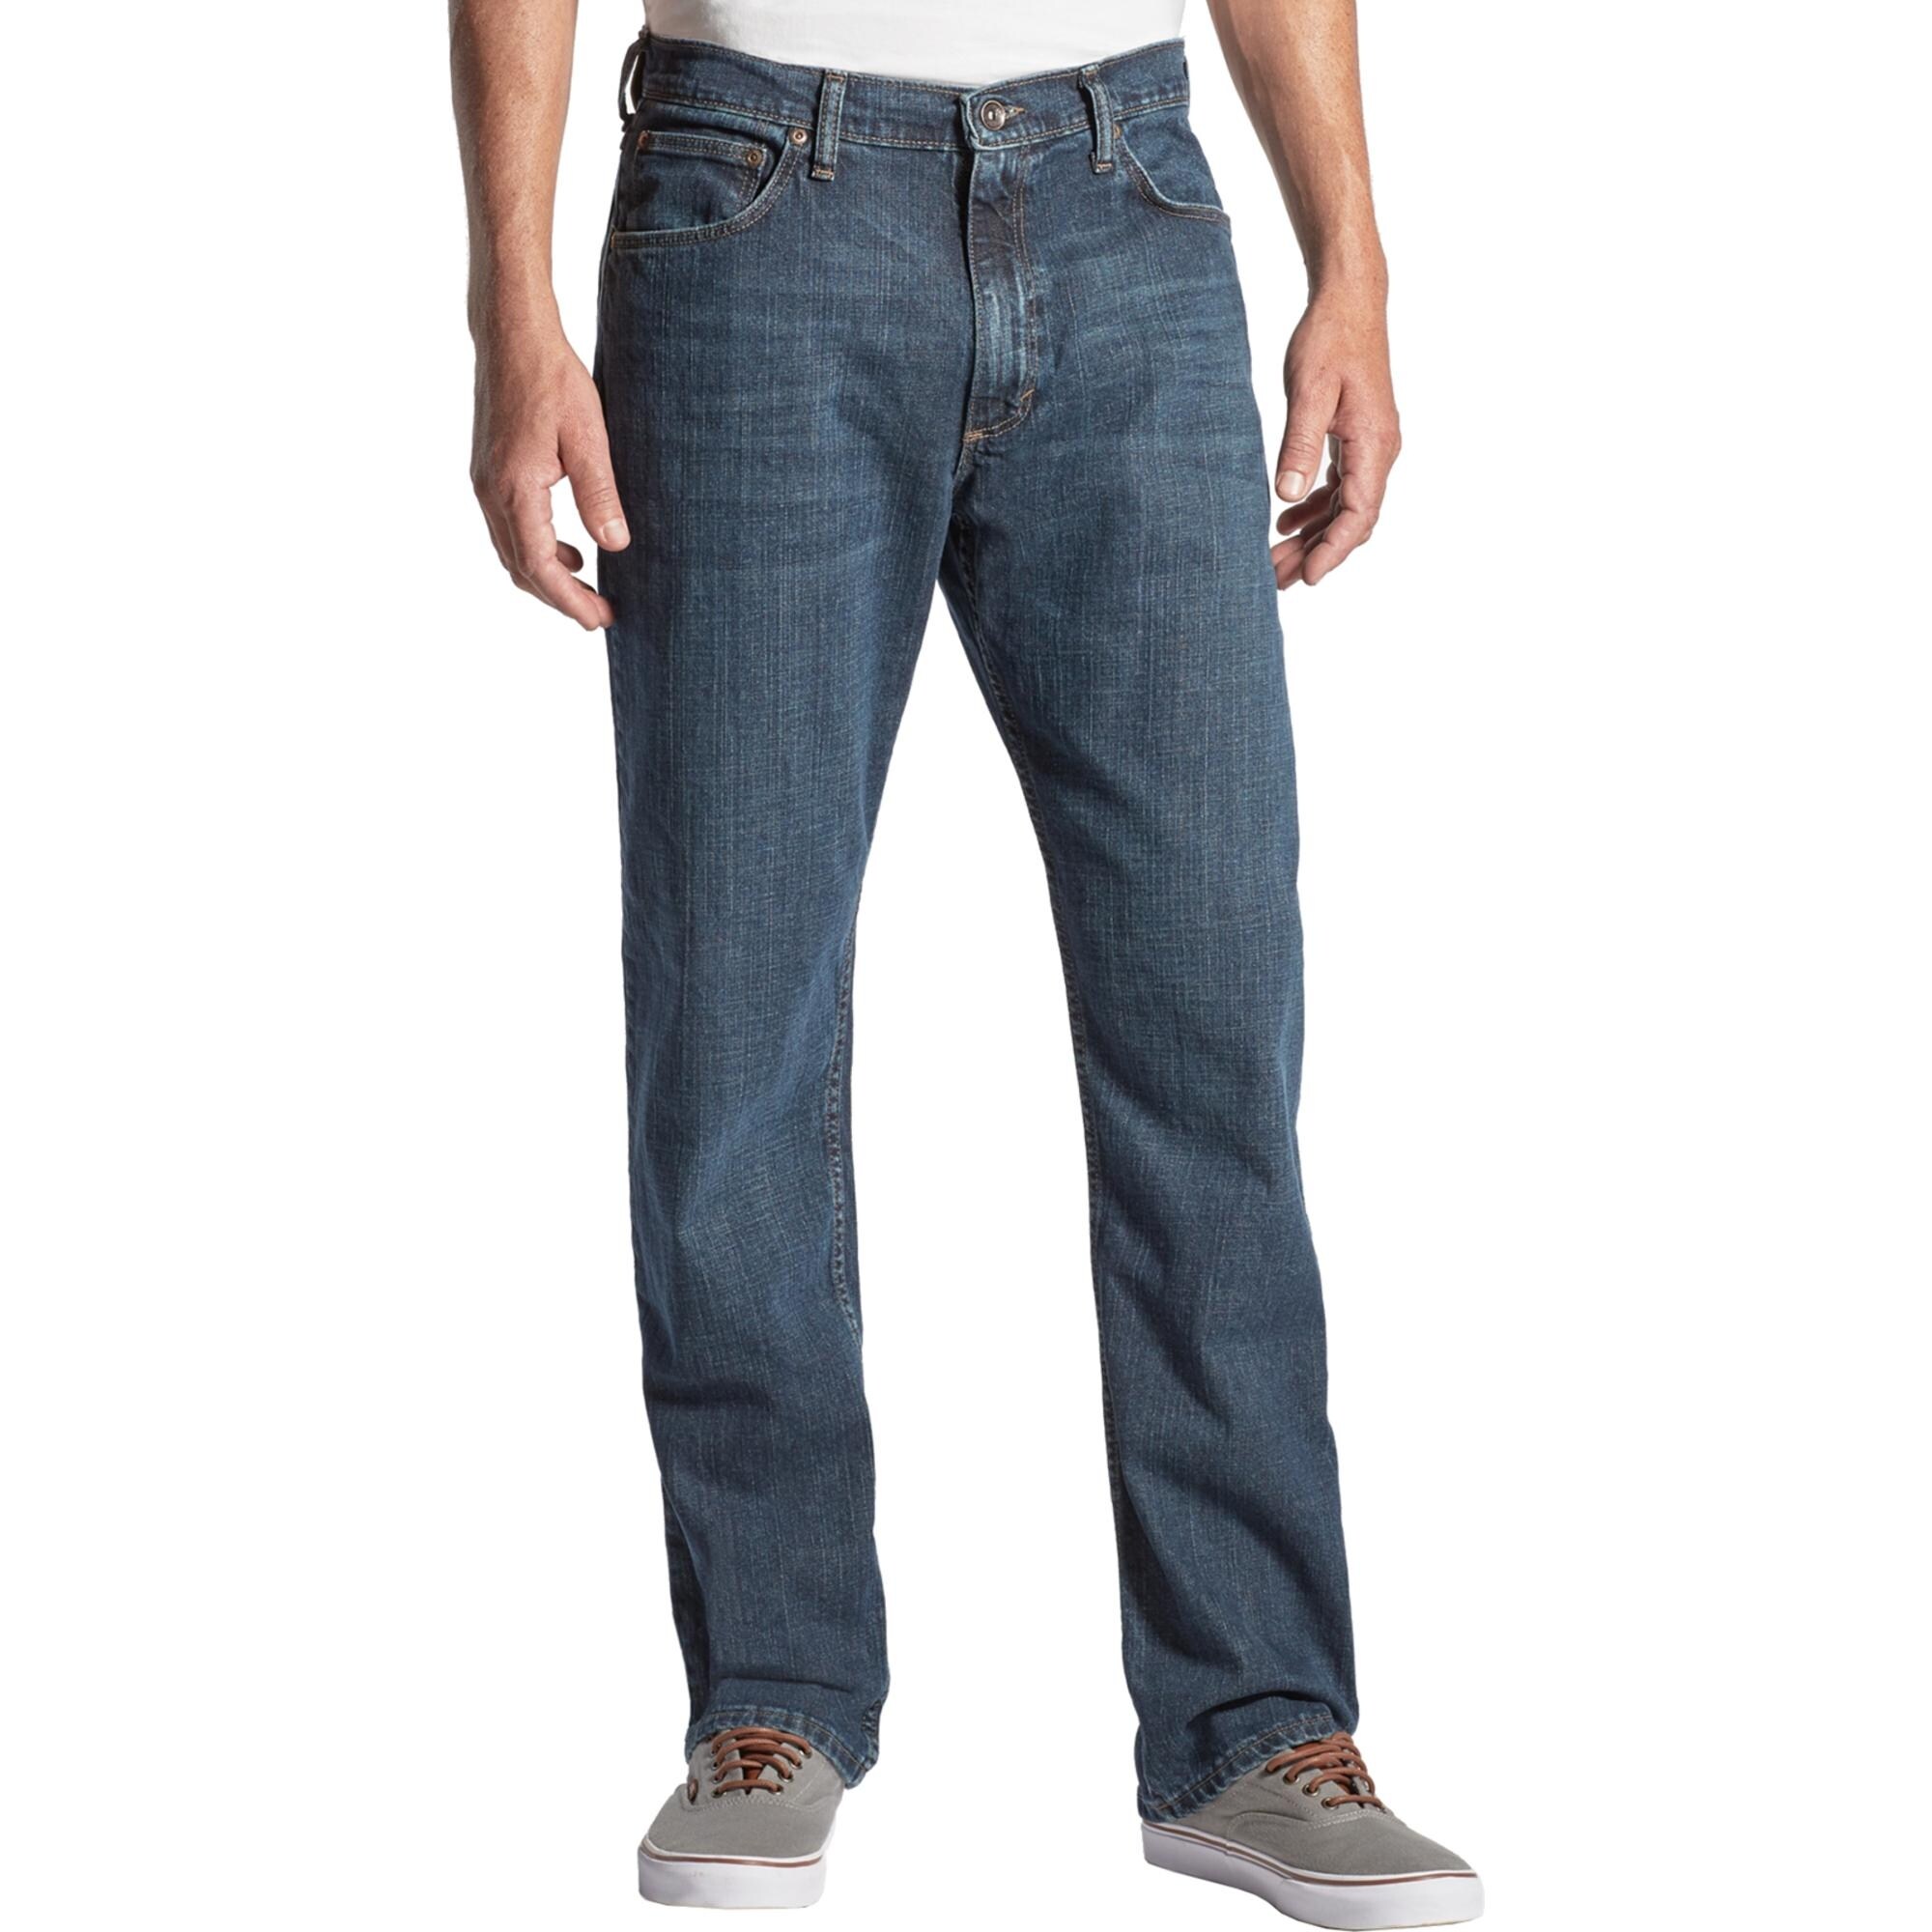 wrangler cotton spandex jeans